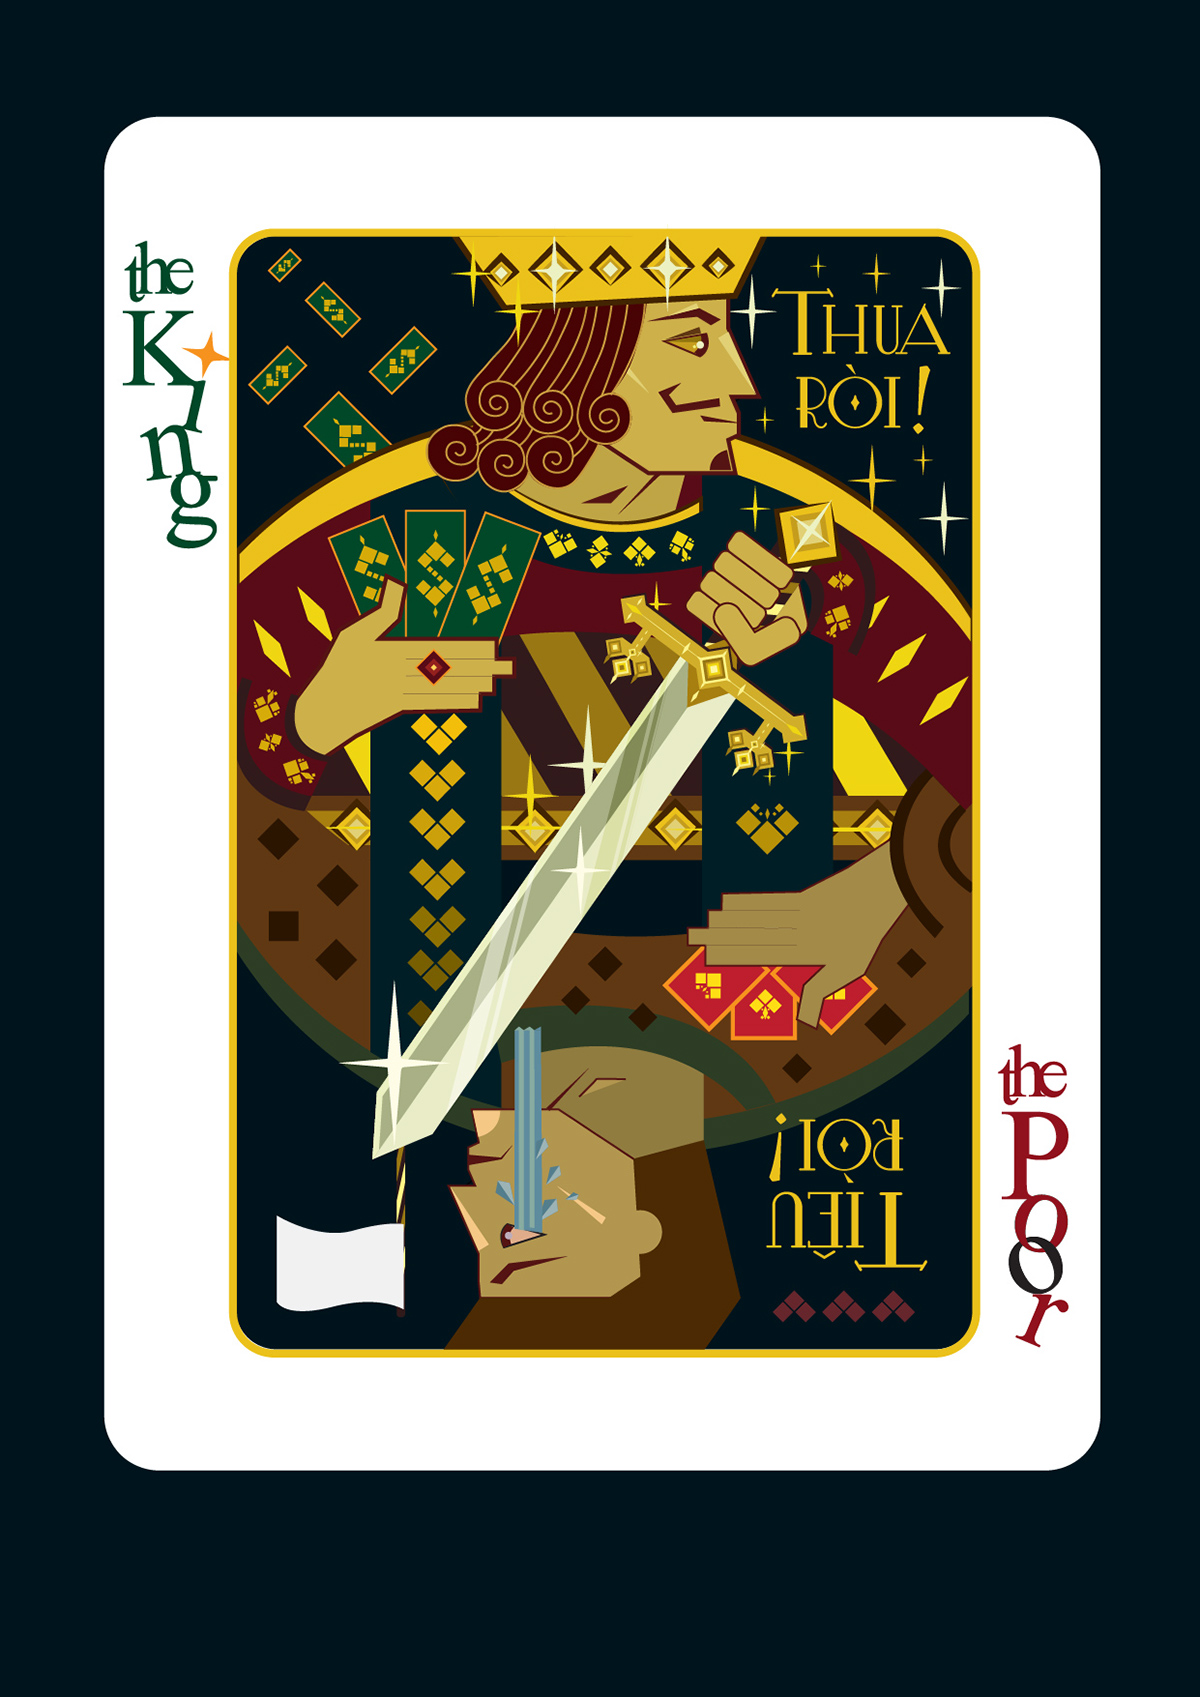 king poor Playing Cards saigon quynhhuong Illustrator ai flat design elements